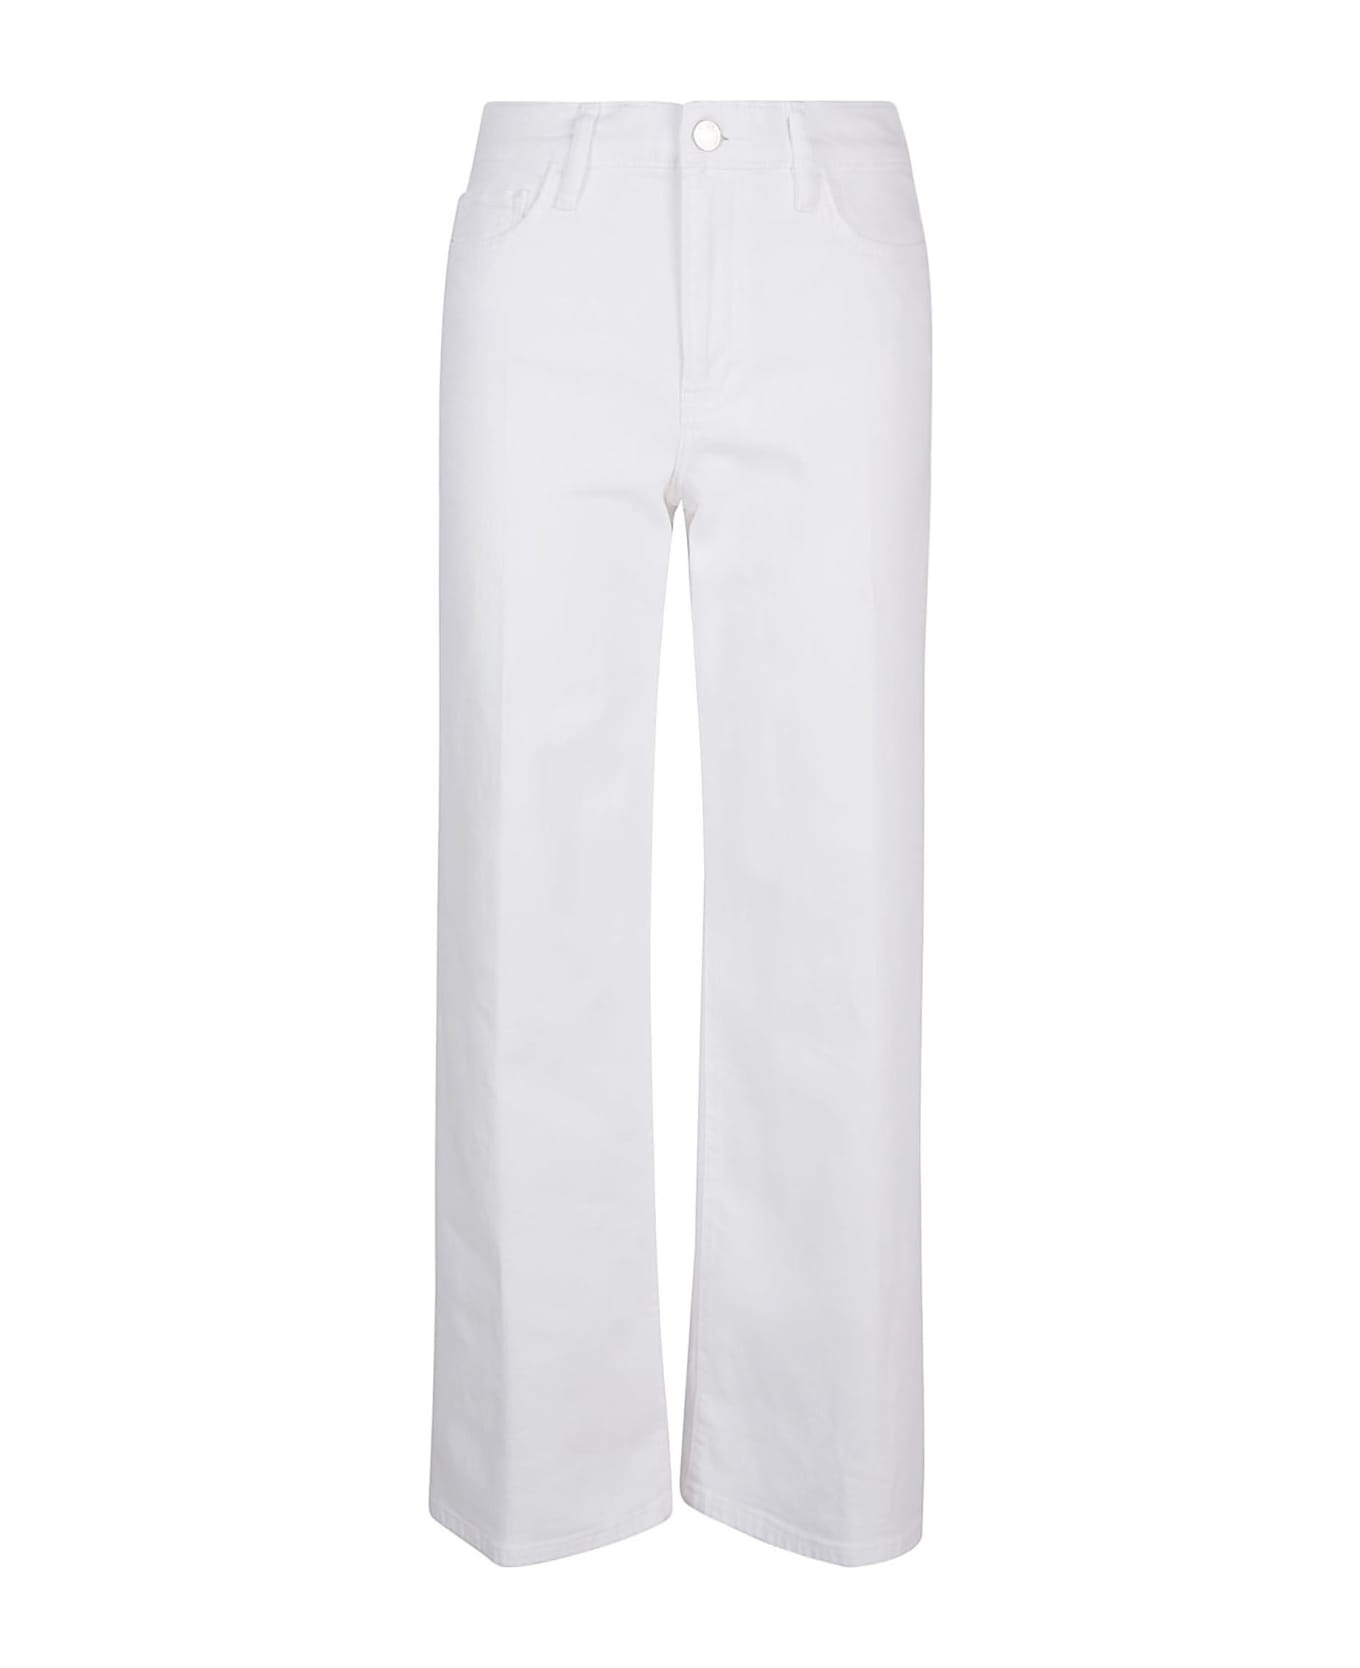 Frame Jeans White - White ボトムス